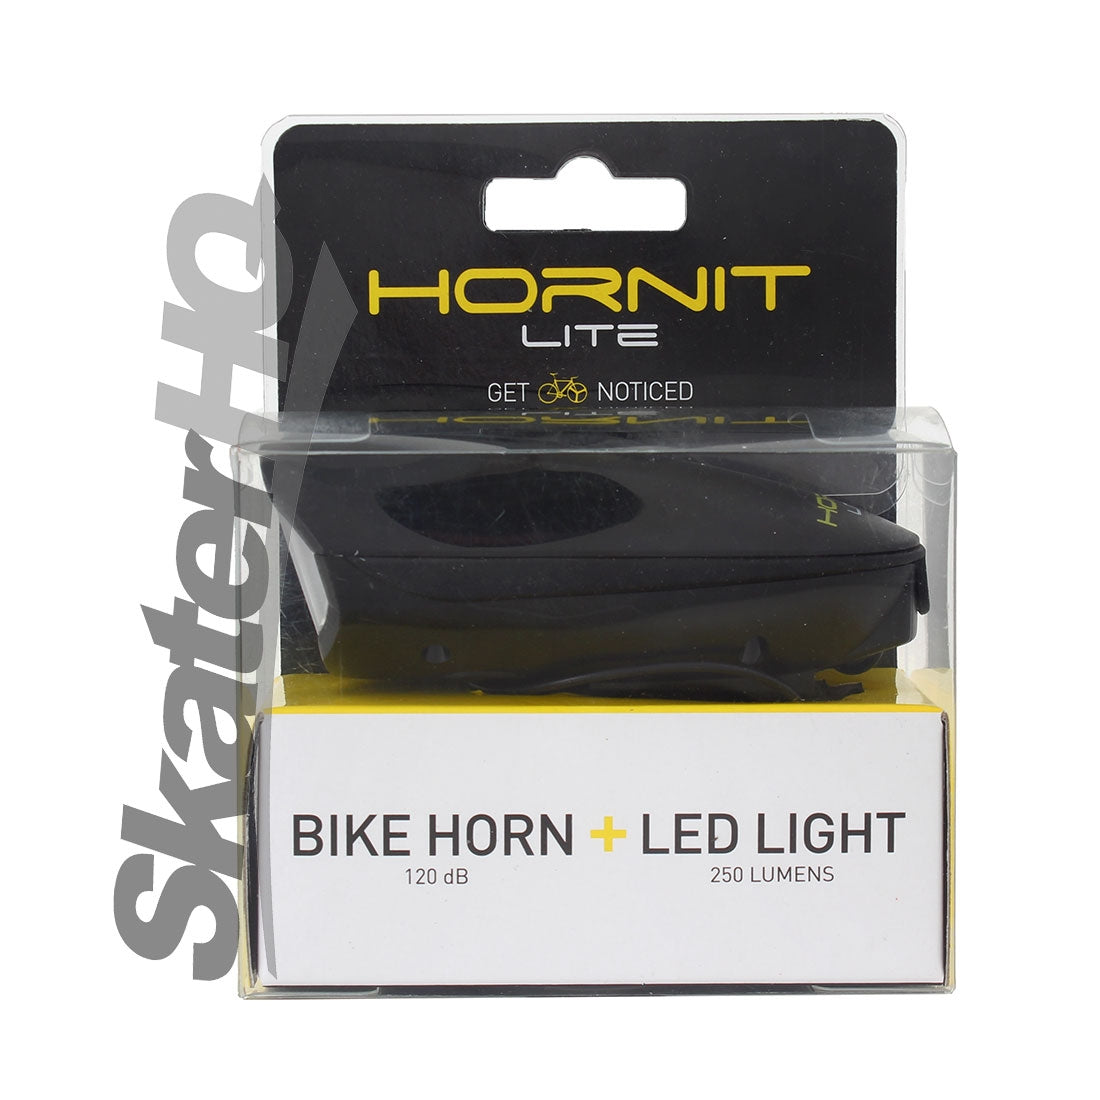 Hornit Lite Bike Horn & Light - Black Scooter Accessories